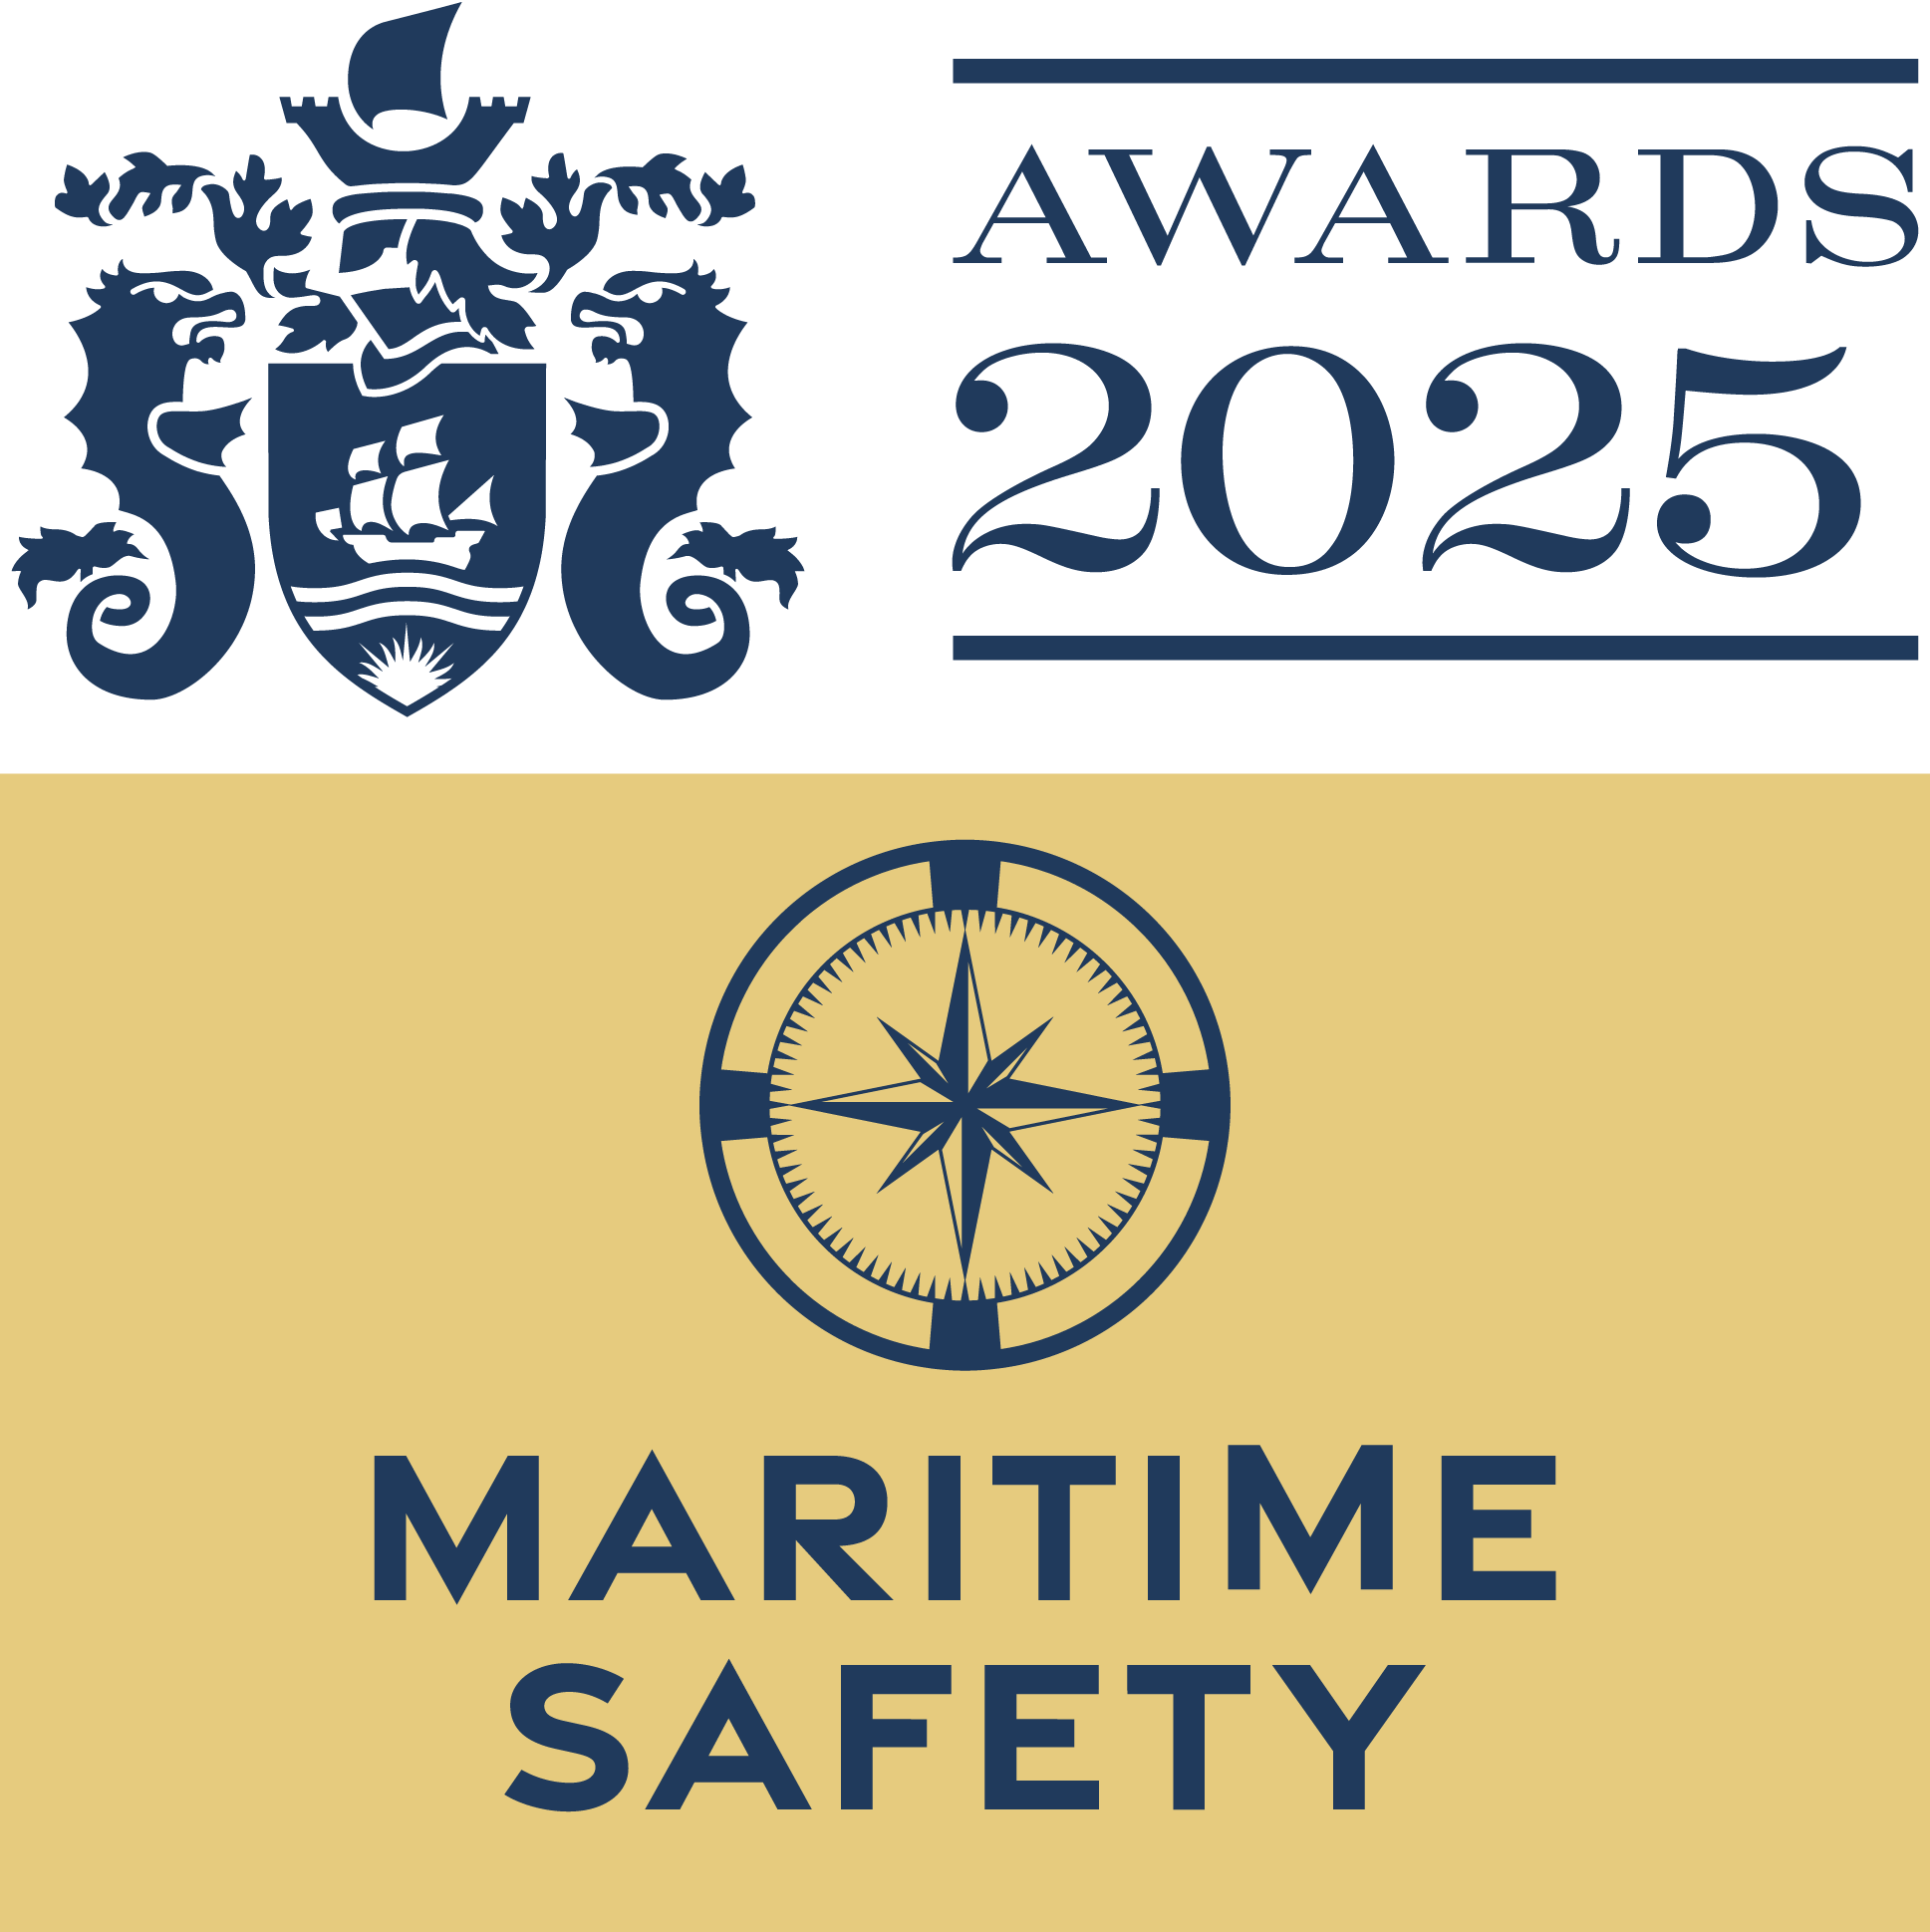 RINA FINAL AWARDS logo safety 2025. Copy